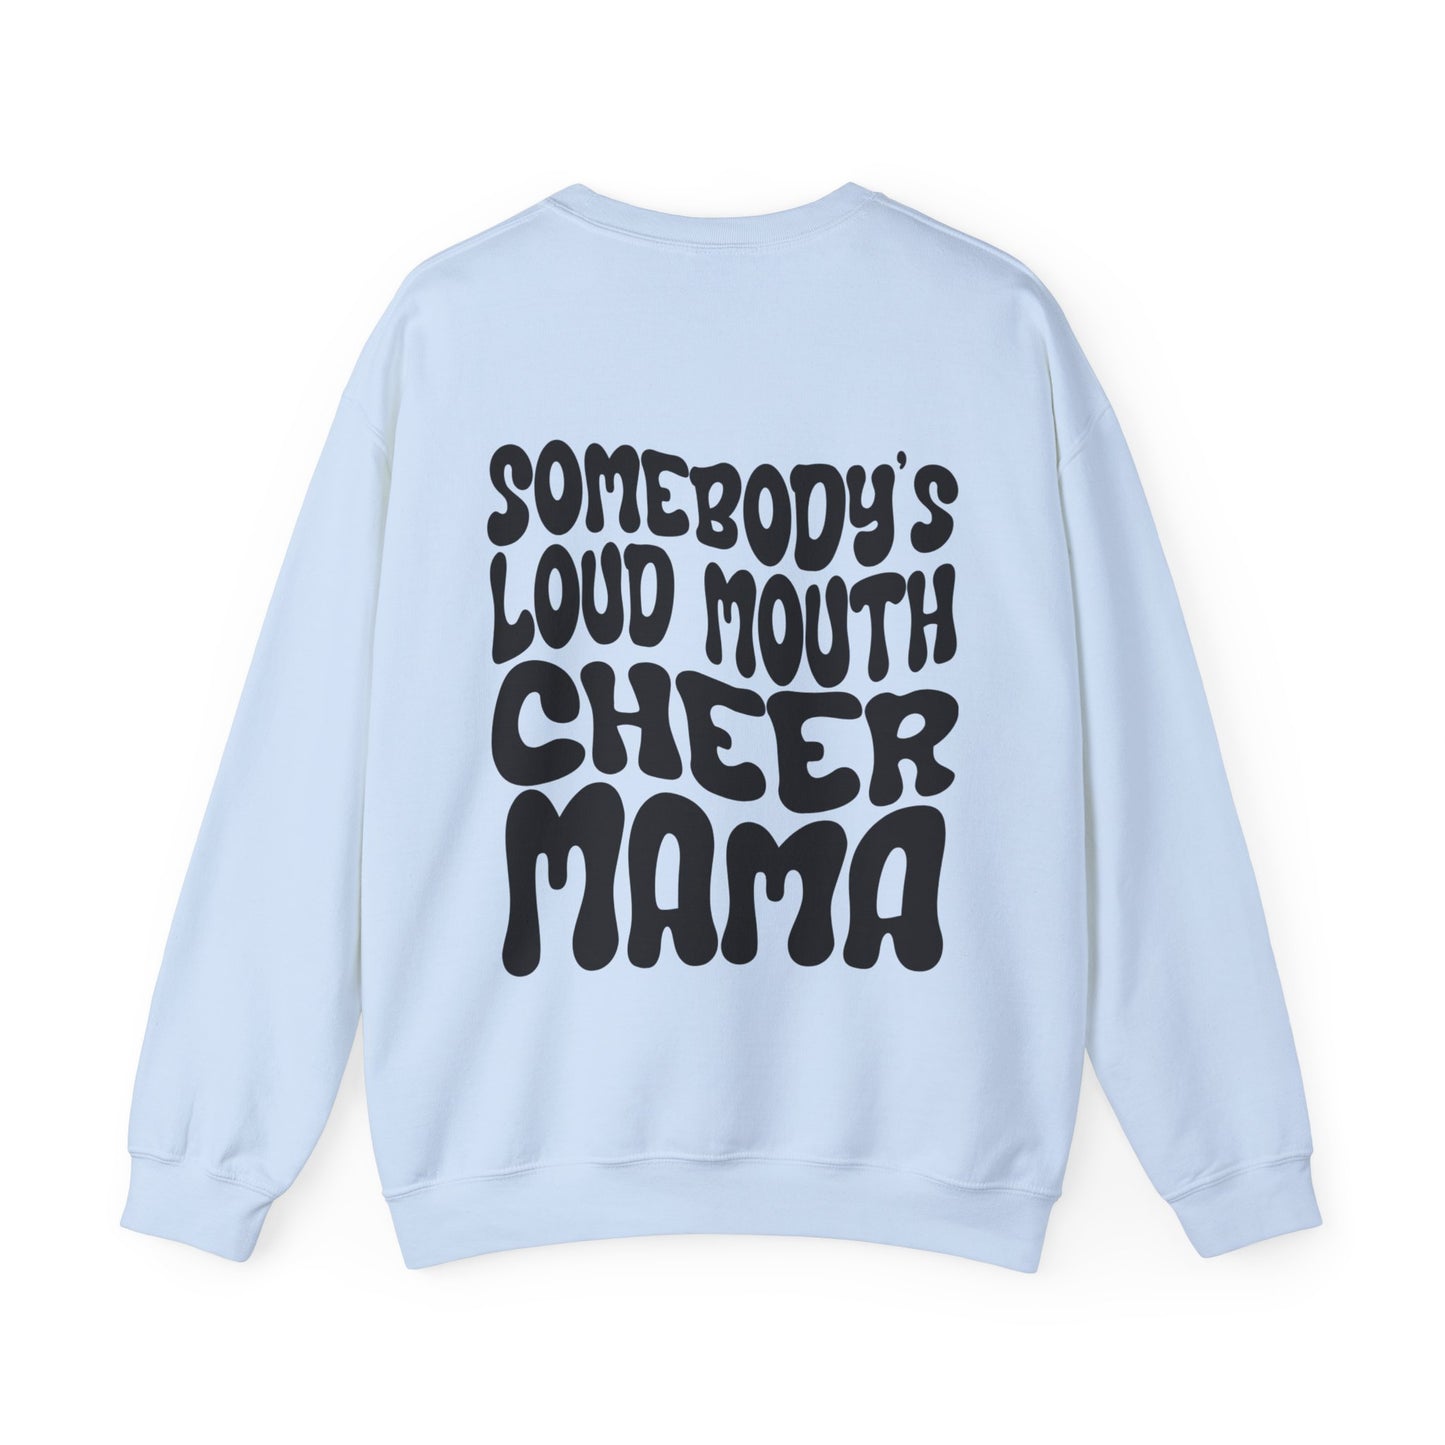 Loud Mouth Cheer Mama Sweatshirt (black letters)